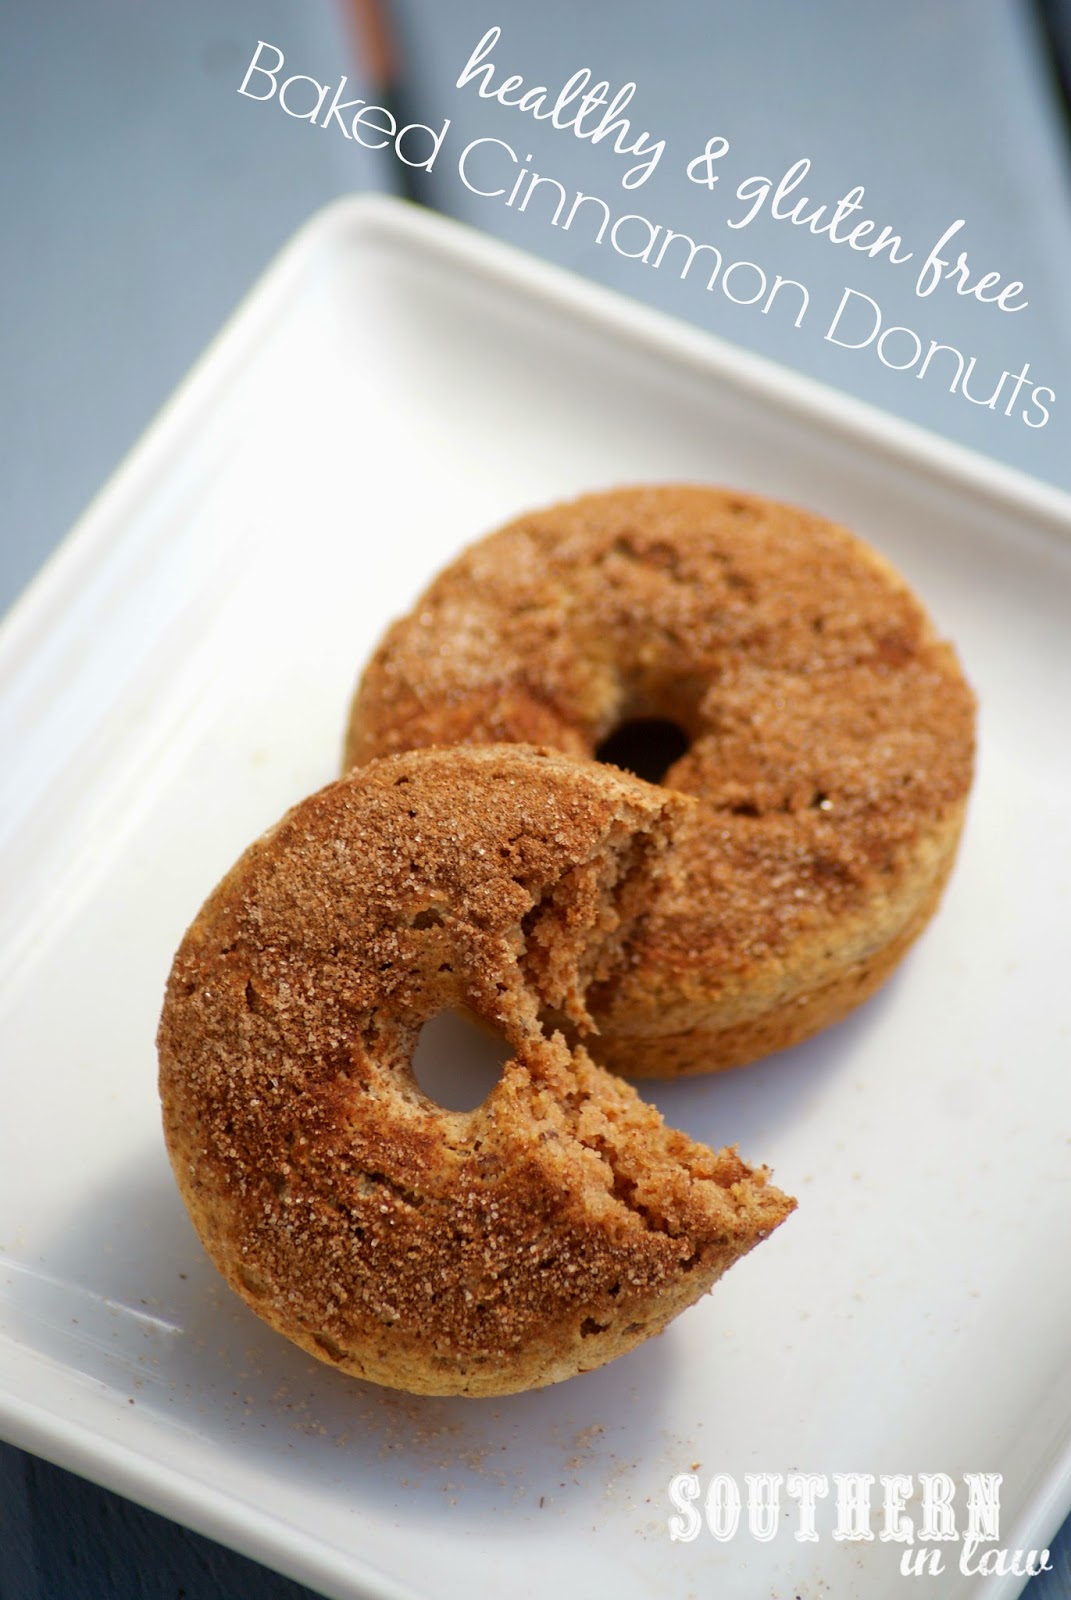 Vegan Baked Cinnamon Donuts Recipe - Gluten free, healthy, low fat, low sugar, egg free, dairy free